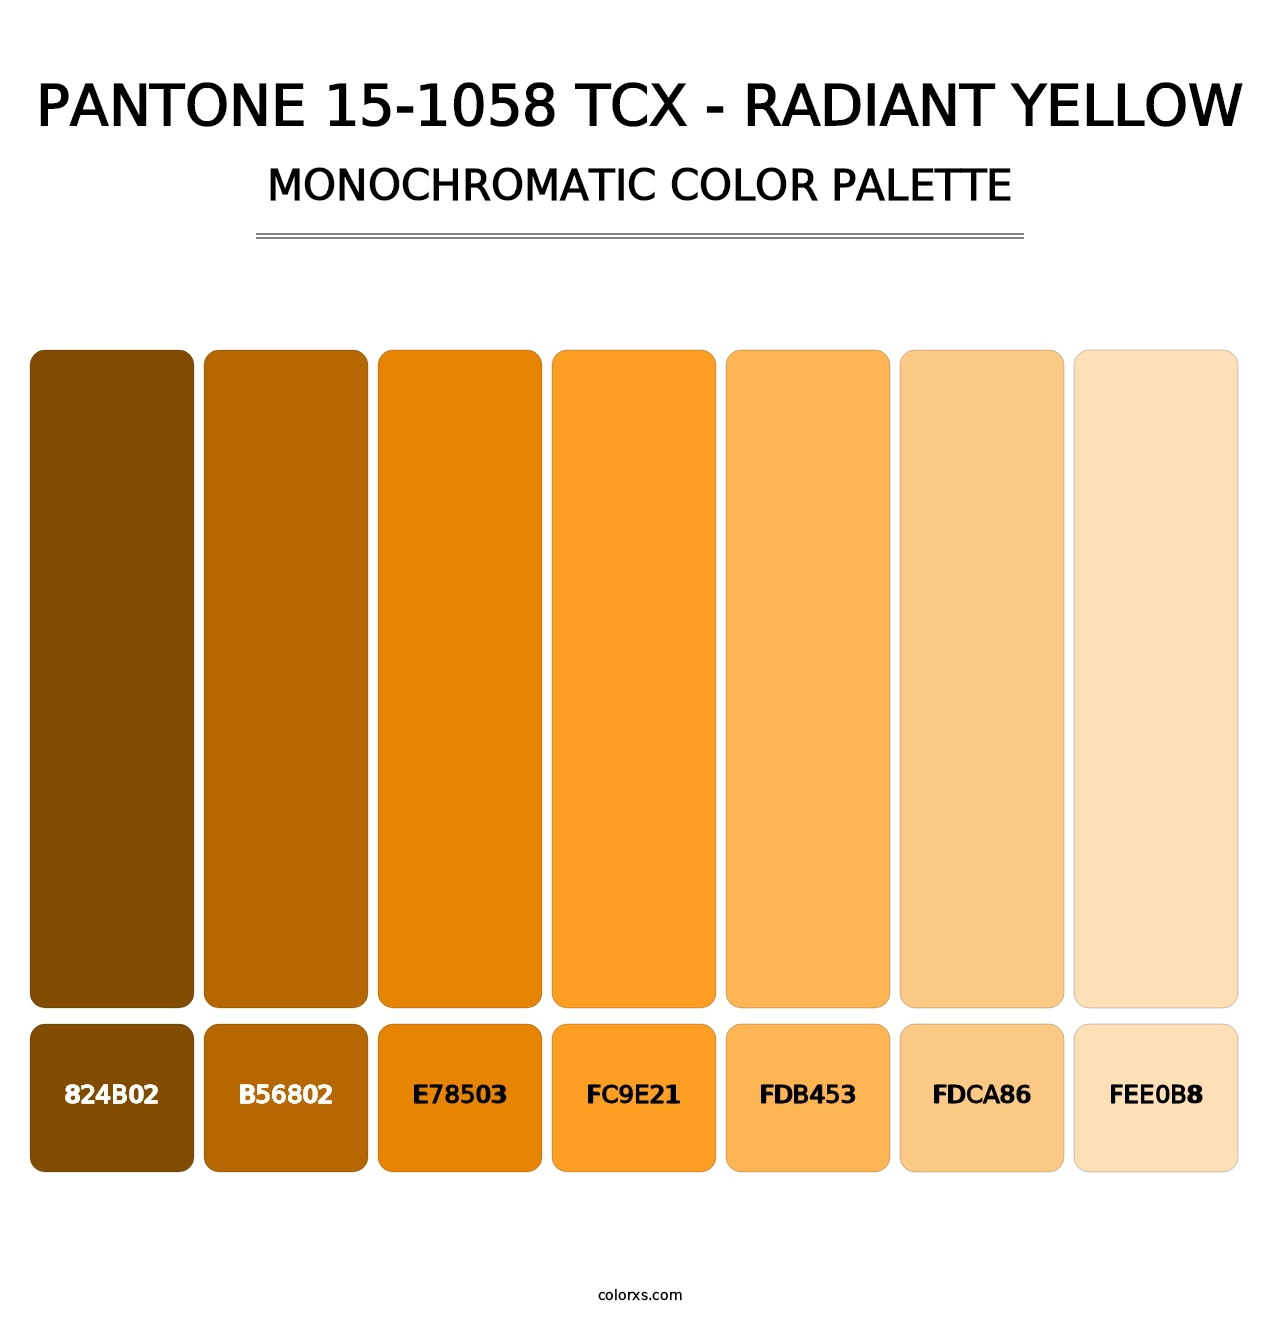 PANTONE 15-1058 TCX - Radiant Yellow - Monochromatic Color Palette